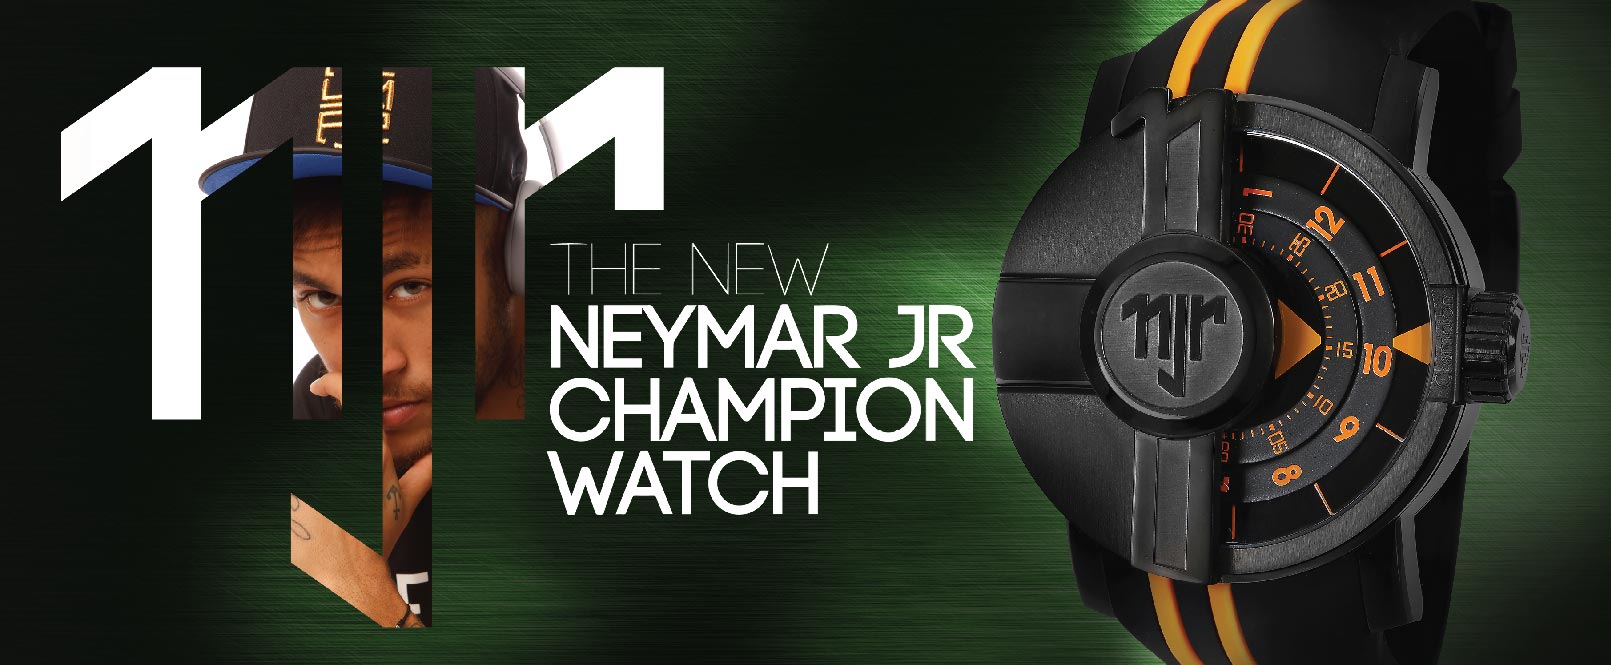 The new Neymar Jr Champion Watch